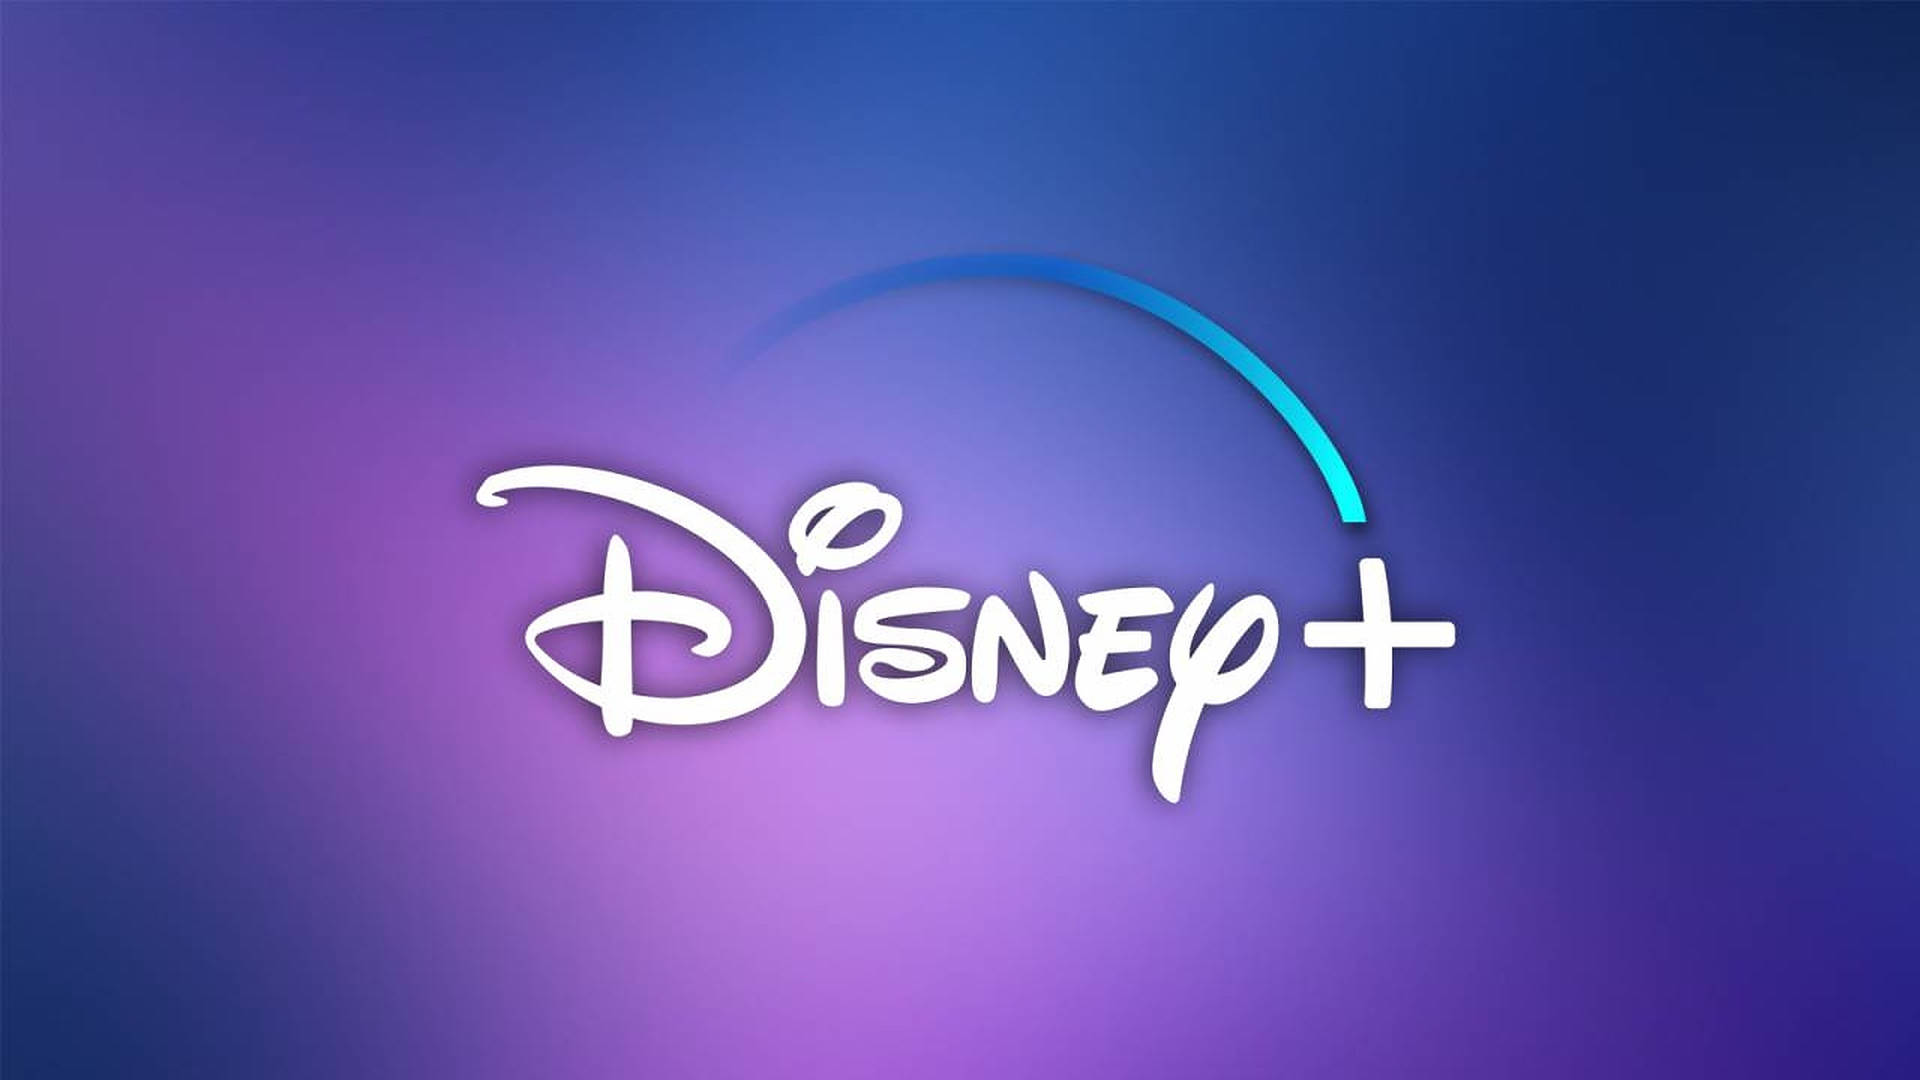 Disney Logo Plus Purple Gradient Wallpaper